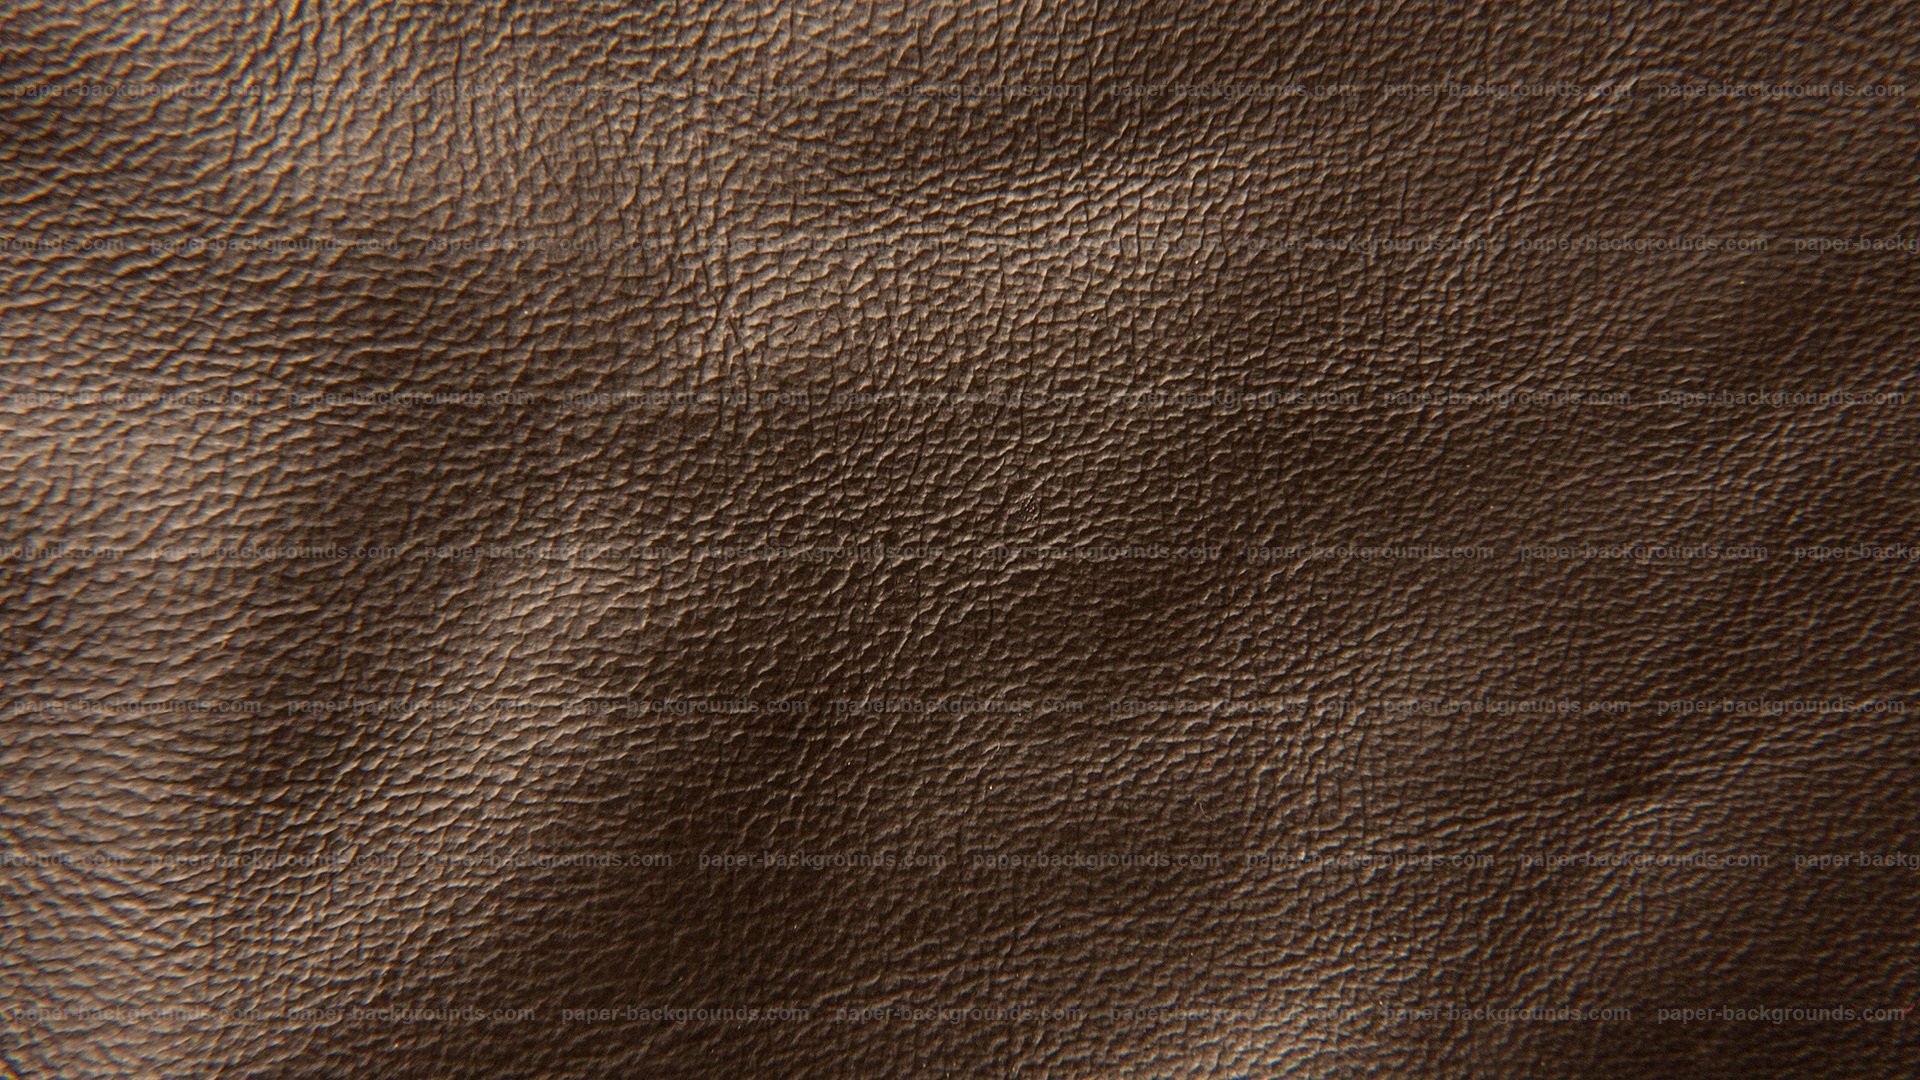 1920x1080 Texture Dark Textured Leather Brown Textureimages ...